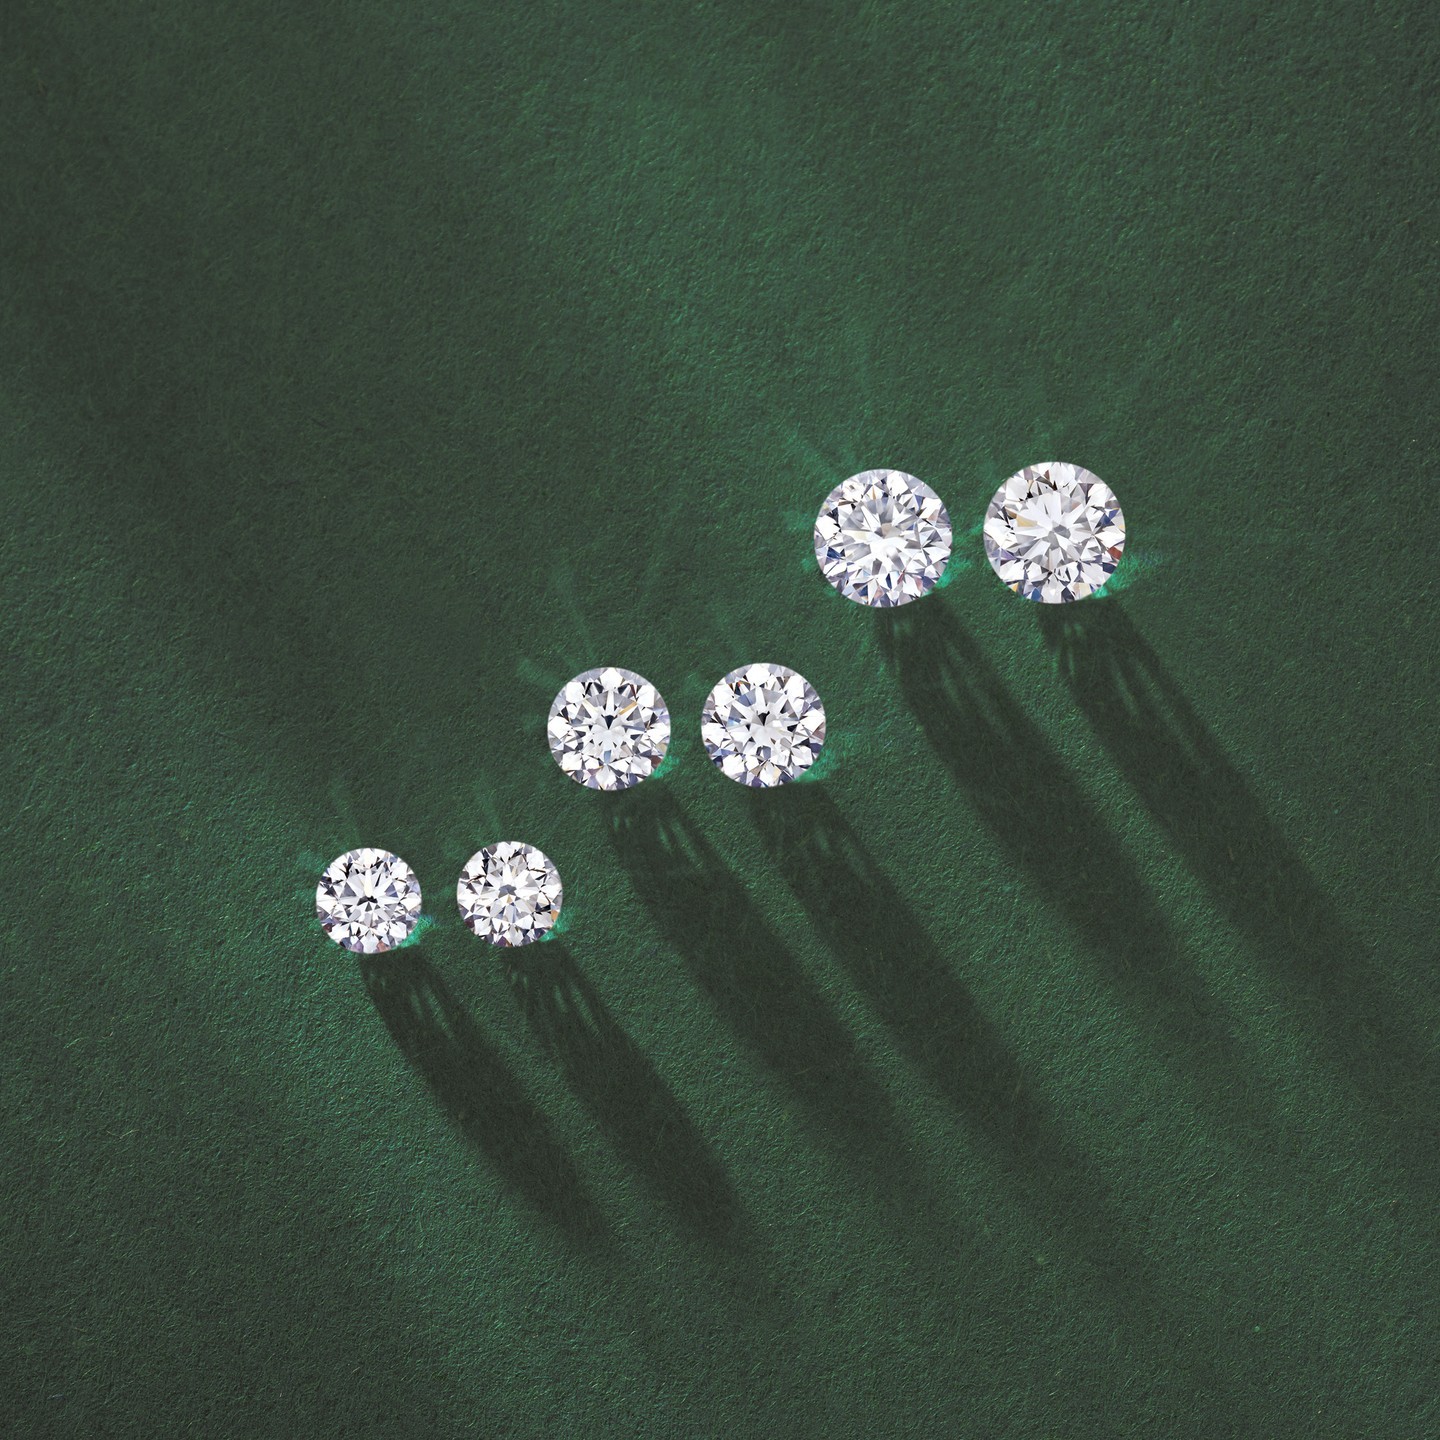 pendientes de diamantes - diamond earrings - joyeria marga mira - diamond jewelry alicante